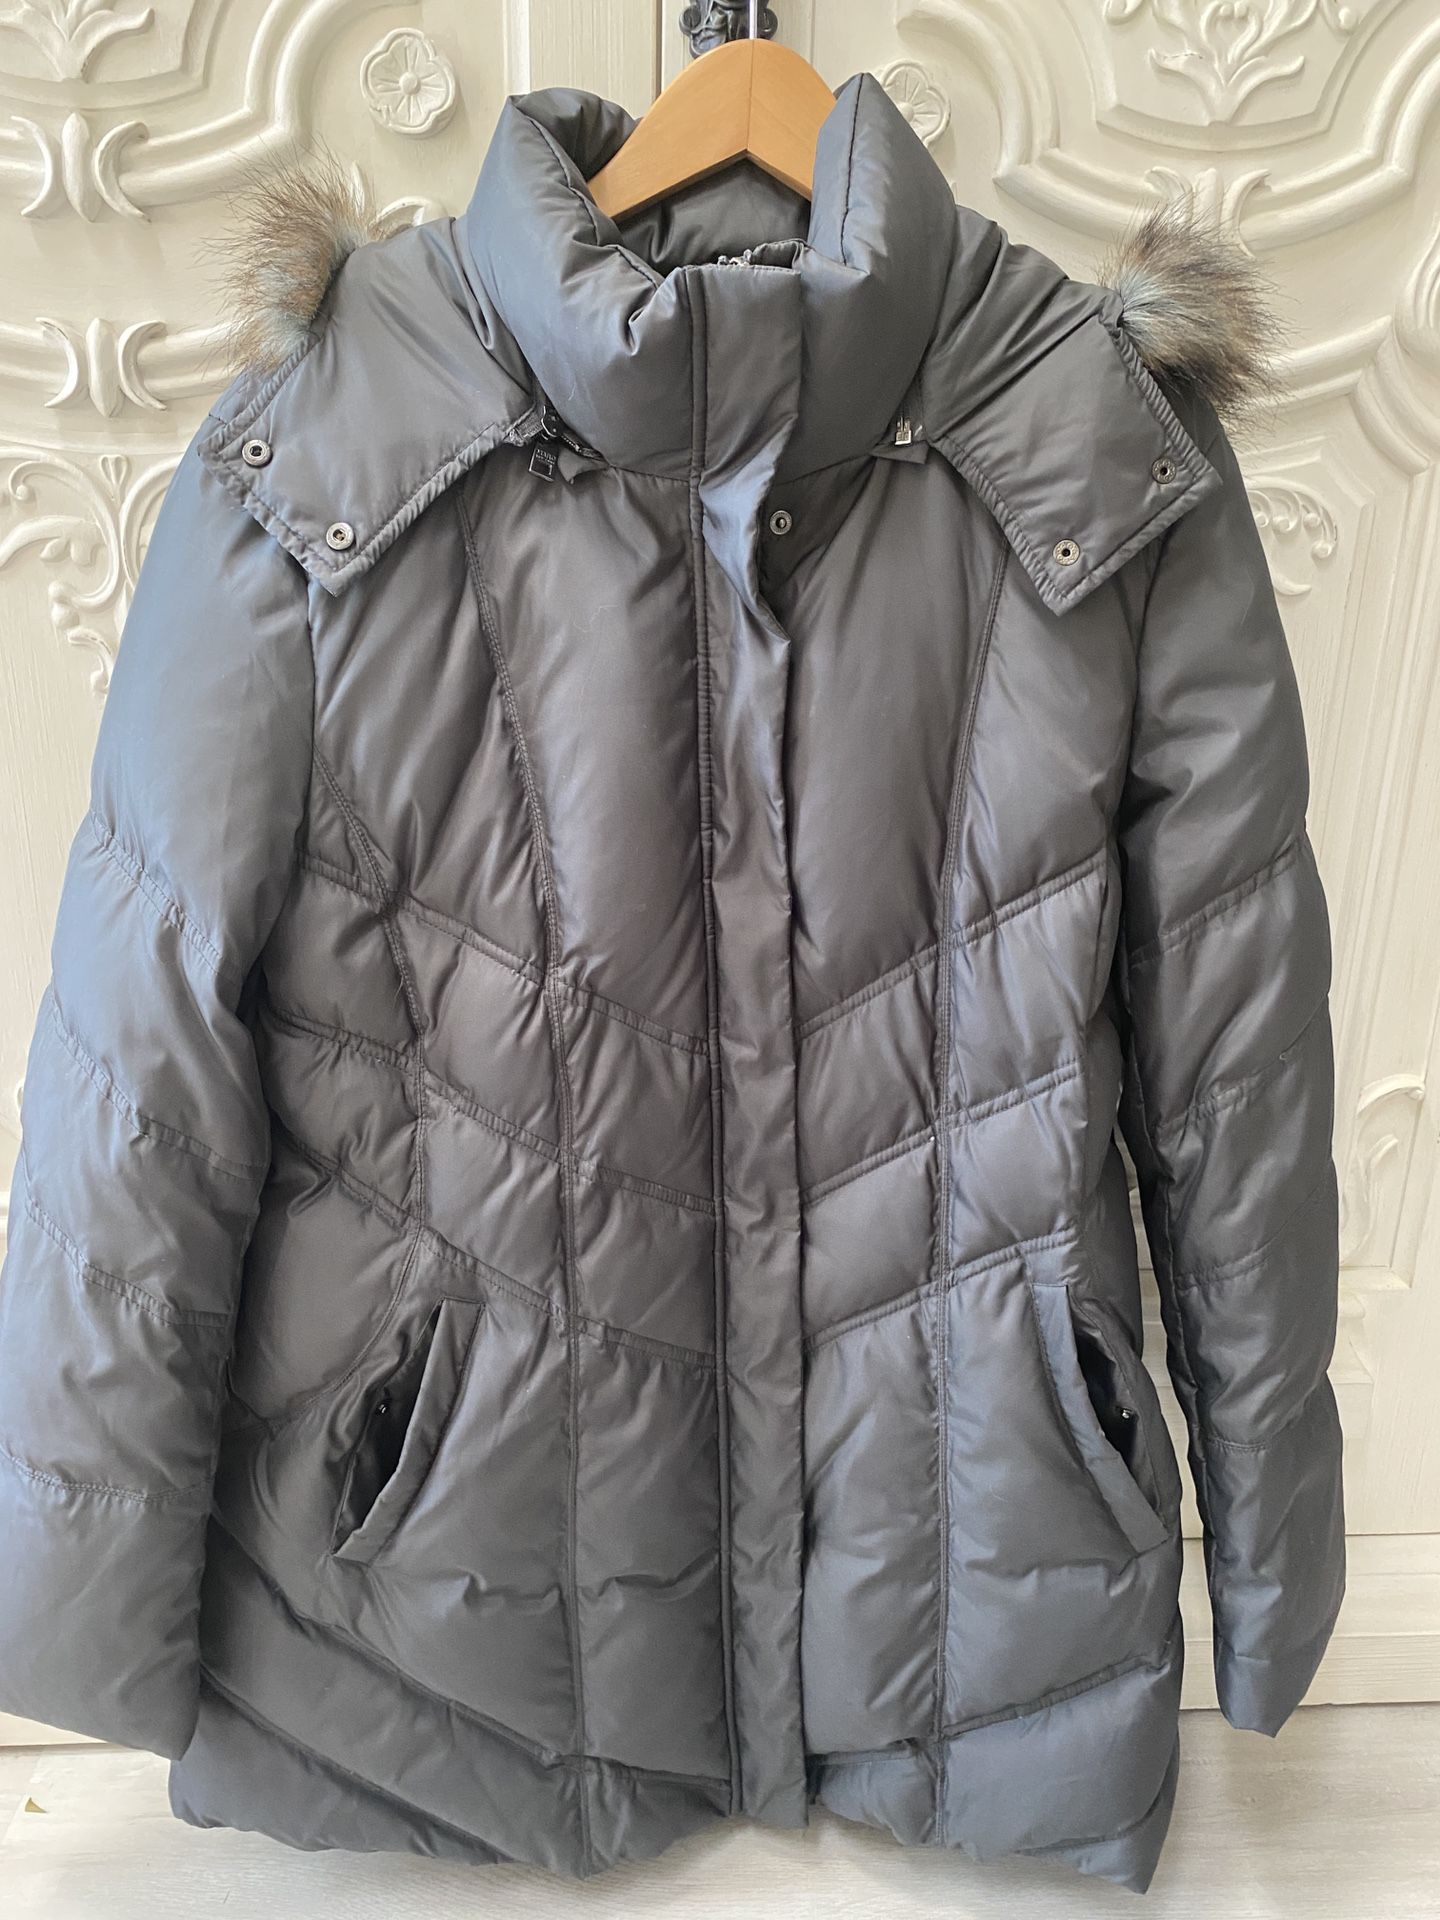 Andrew Marc black faux fur jacket parka warm XL New York GUC winter coat